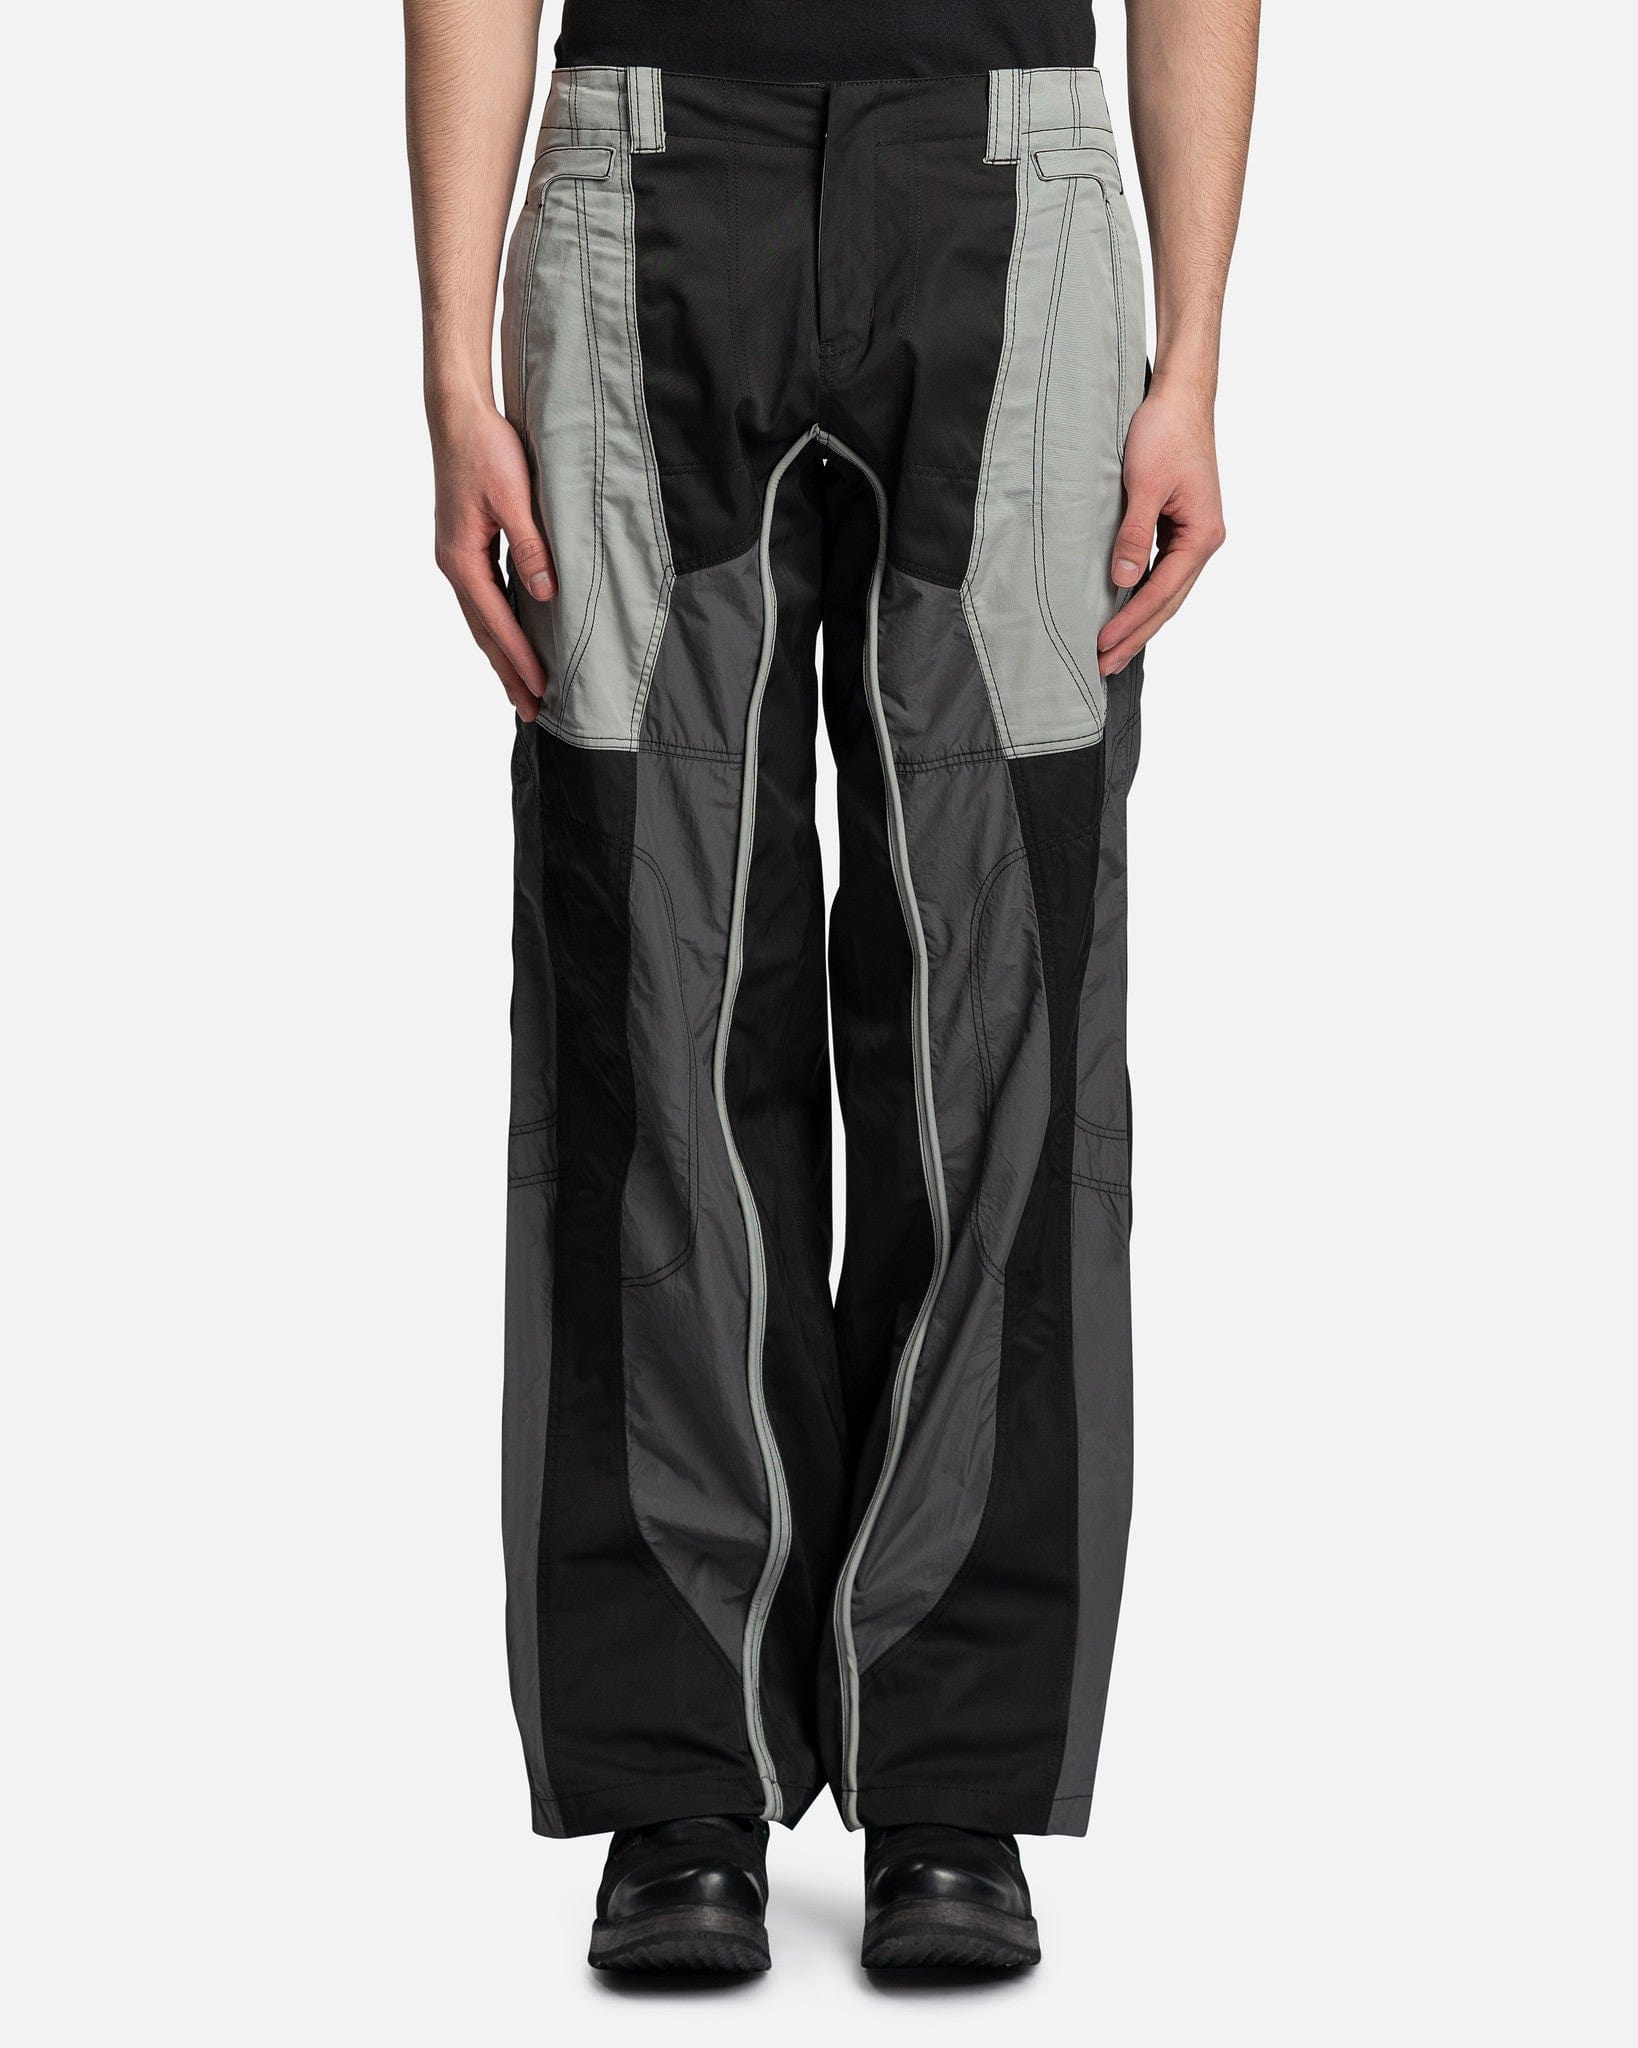 FFFPOSTALSERVICE Zip Trouser Black パンツ - ワークパンツ/カーゴパンツ